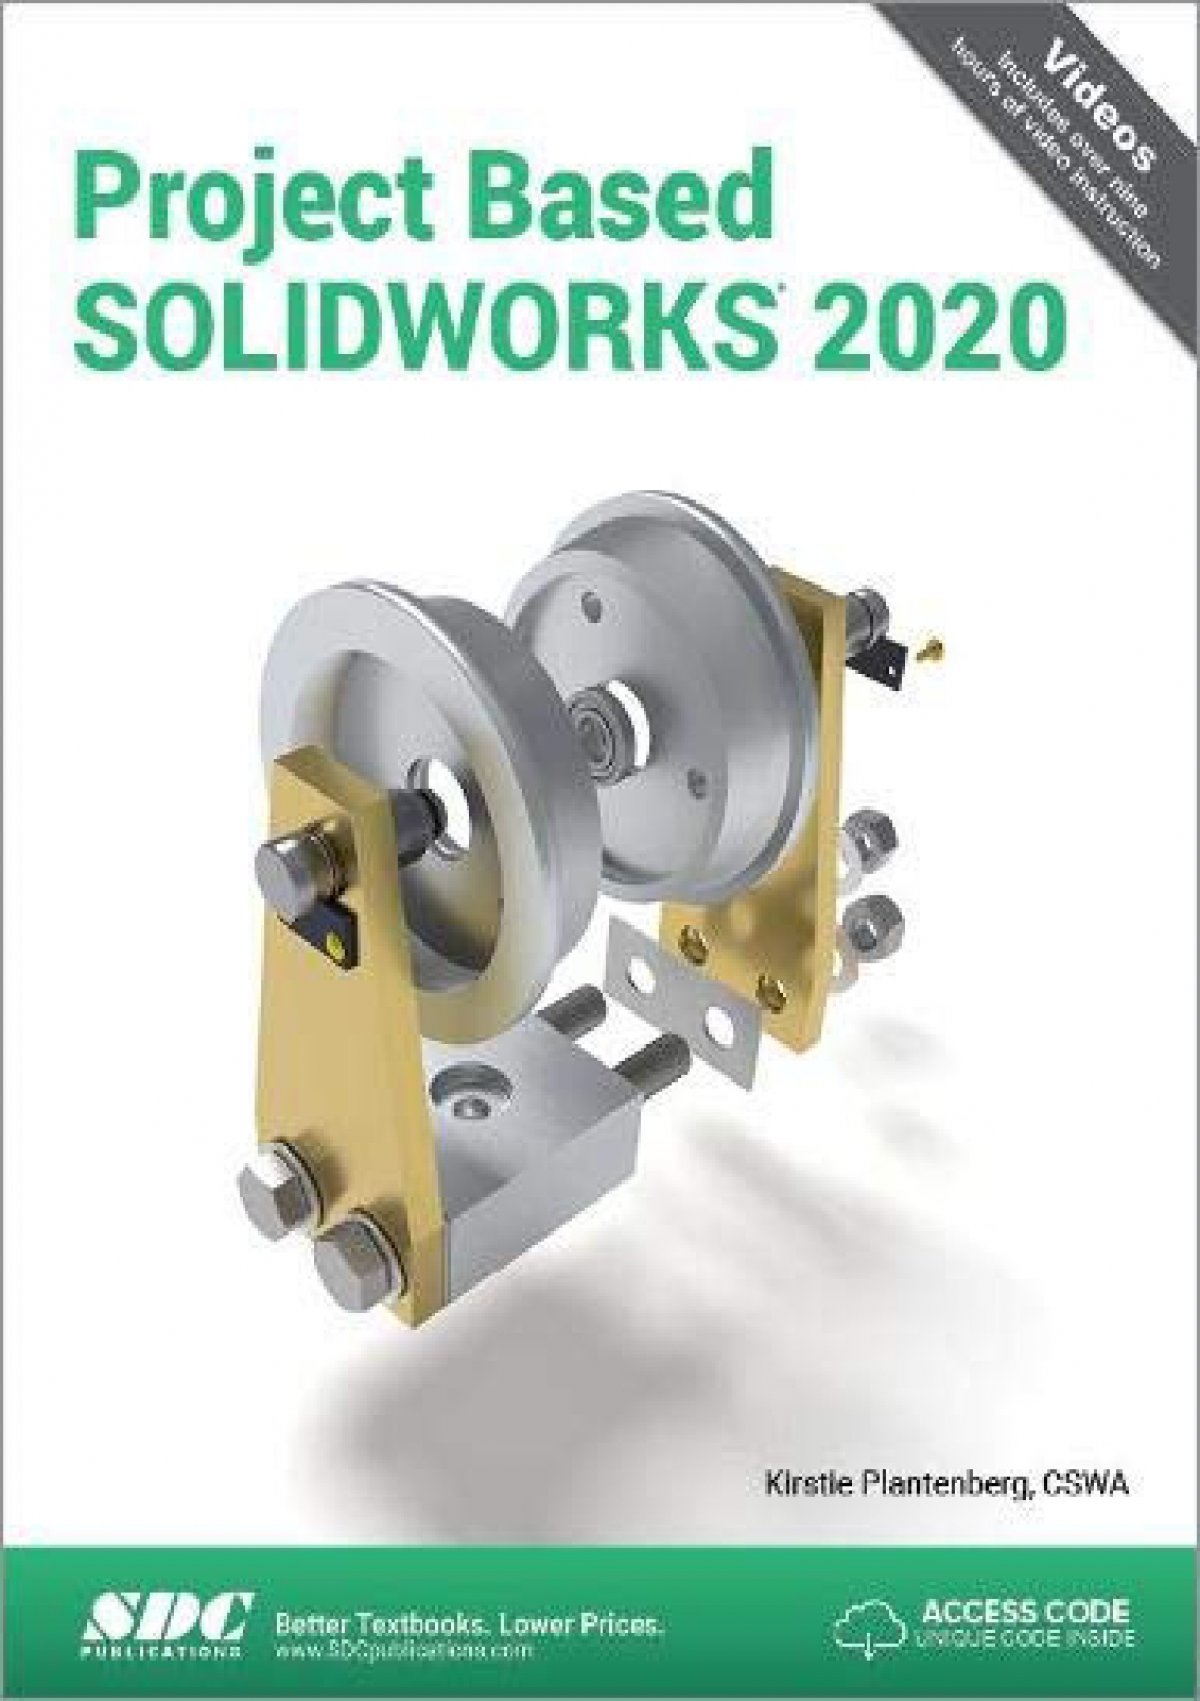 solidworks ebook free download